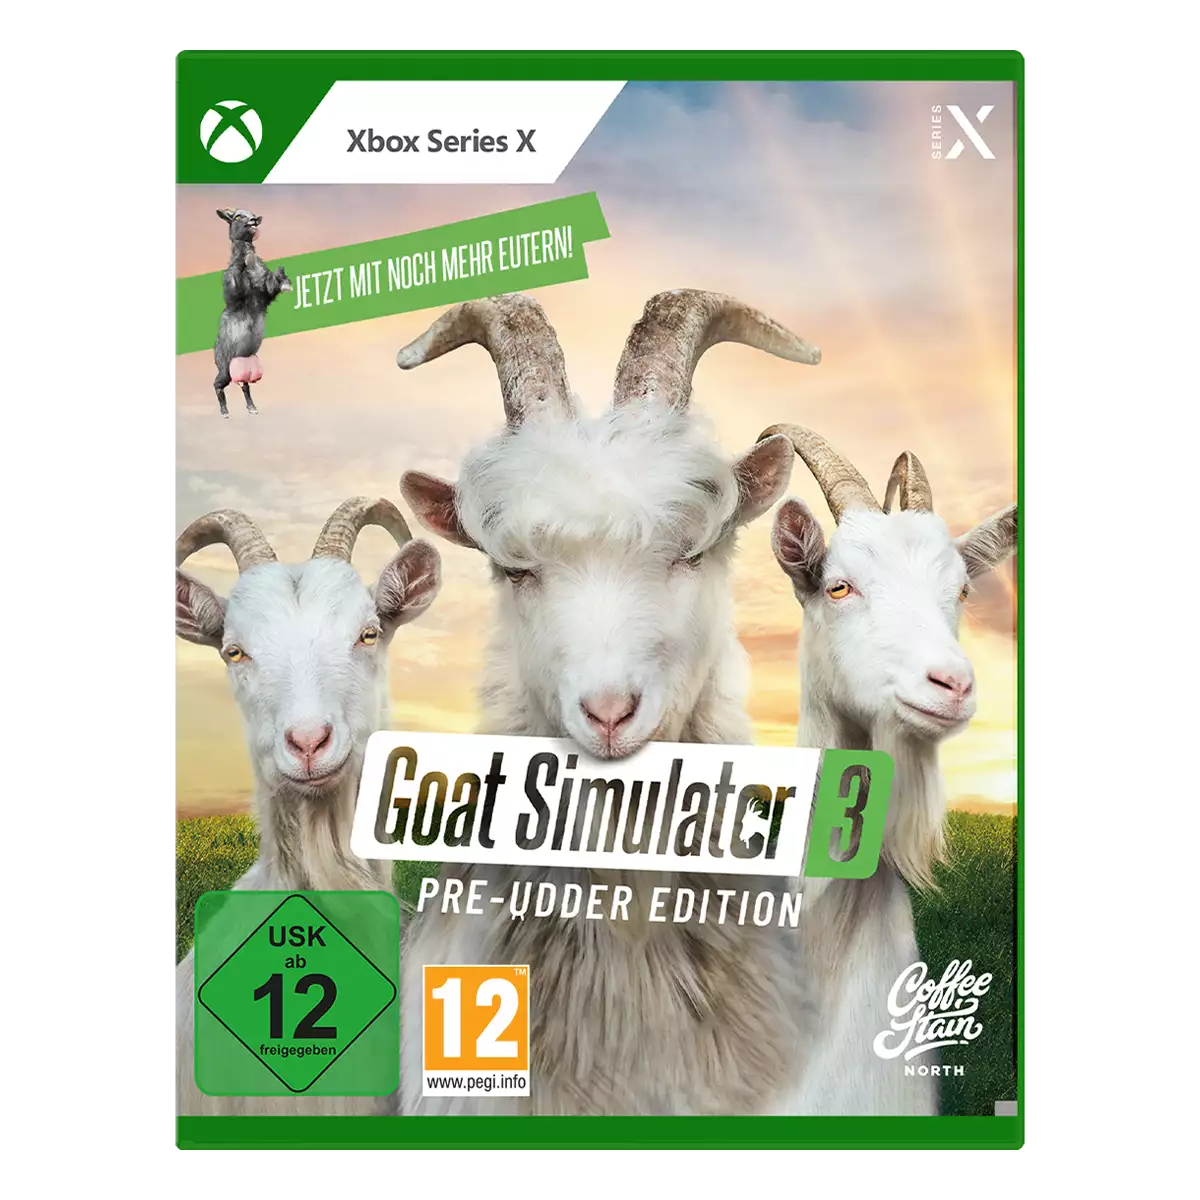 Goat Simulator 3 Pre-Udder Edition (XSRX)